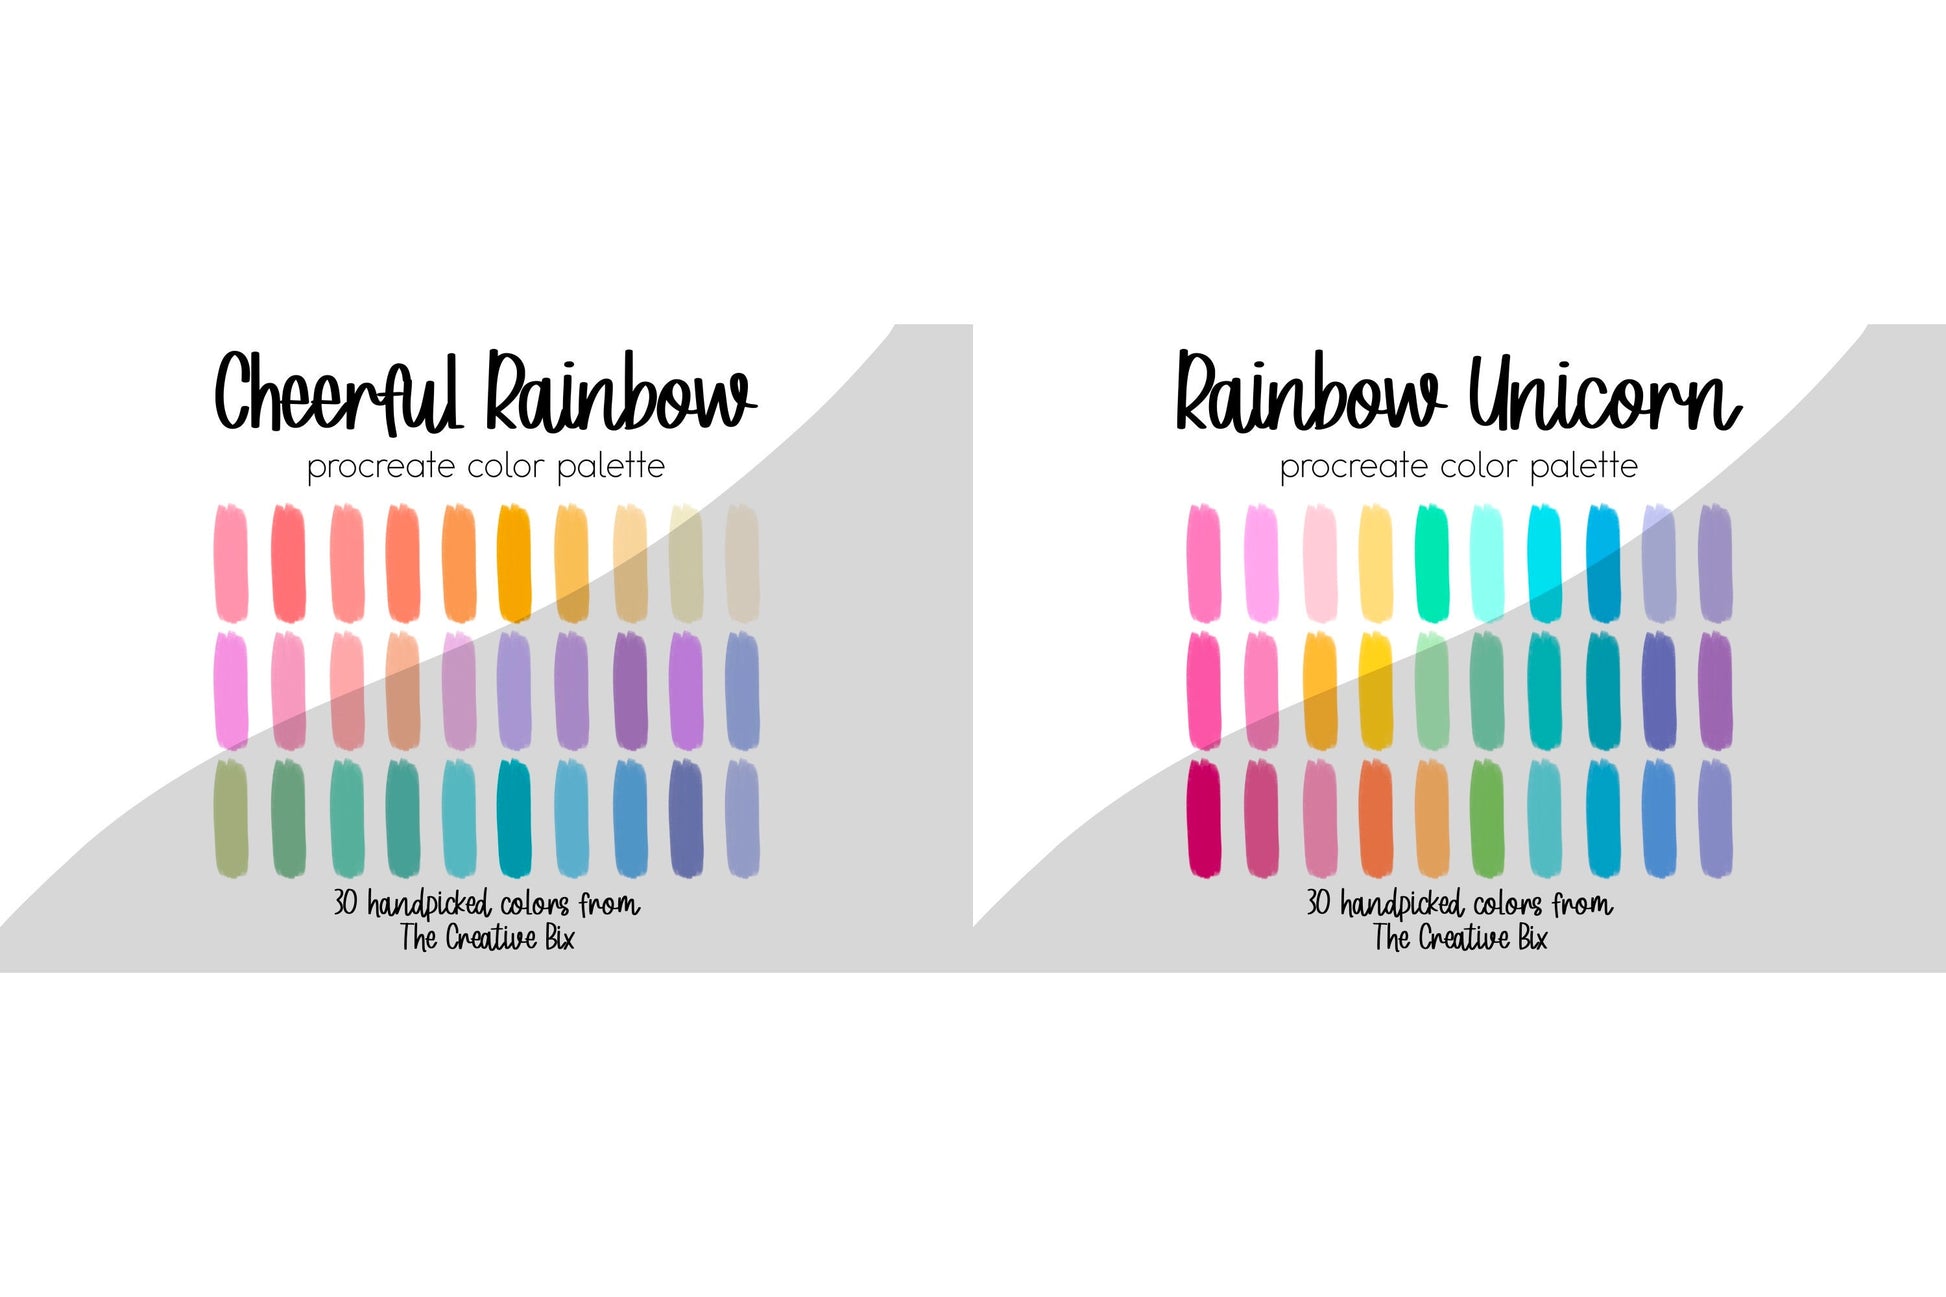 pastel colors of the rainbow Color Palette